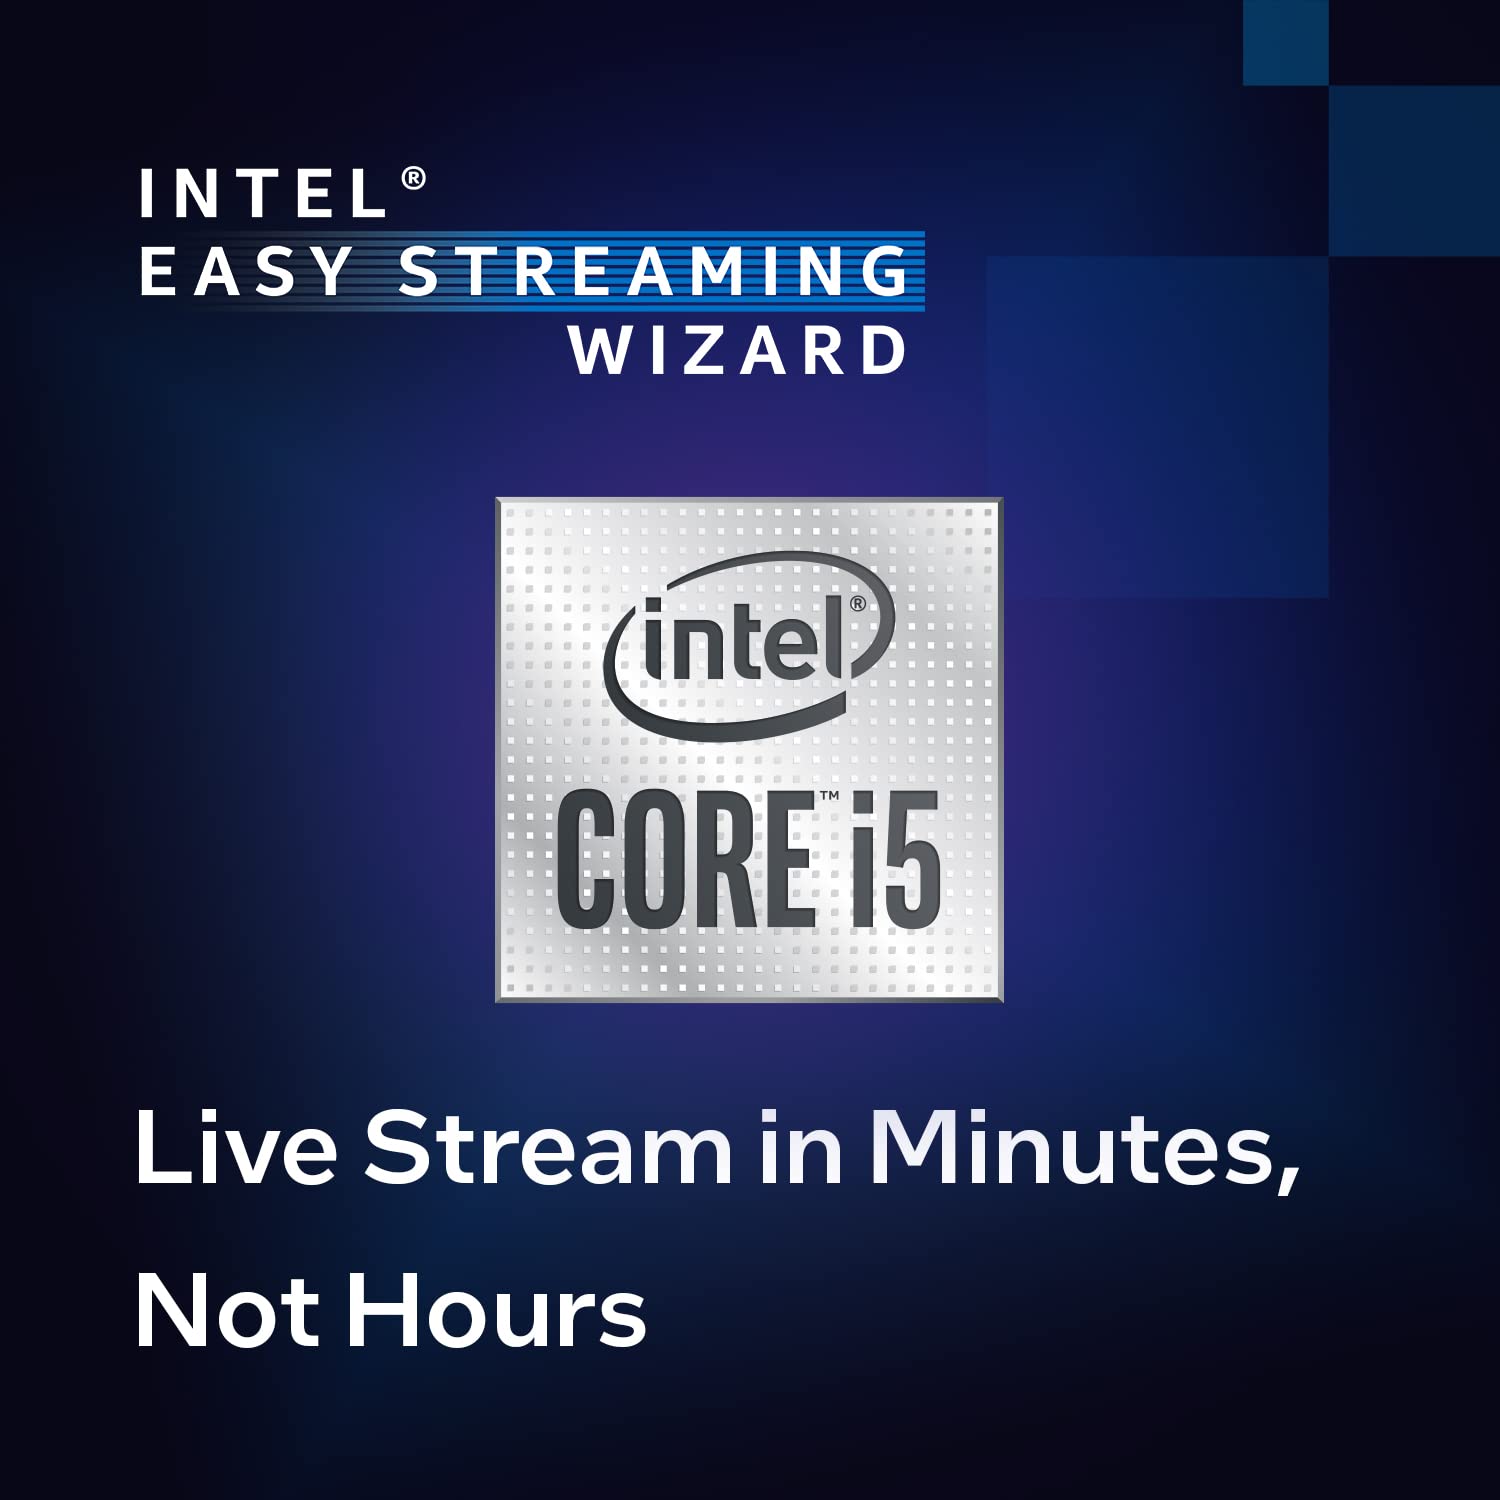 Intel i5-10400F 10th generation Core processor with 6 cores, 12